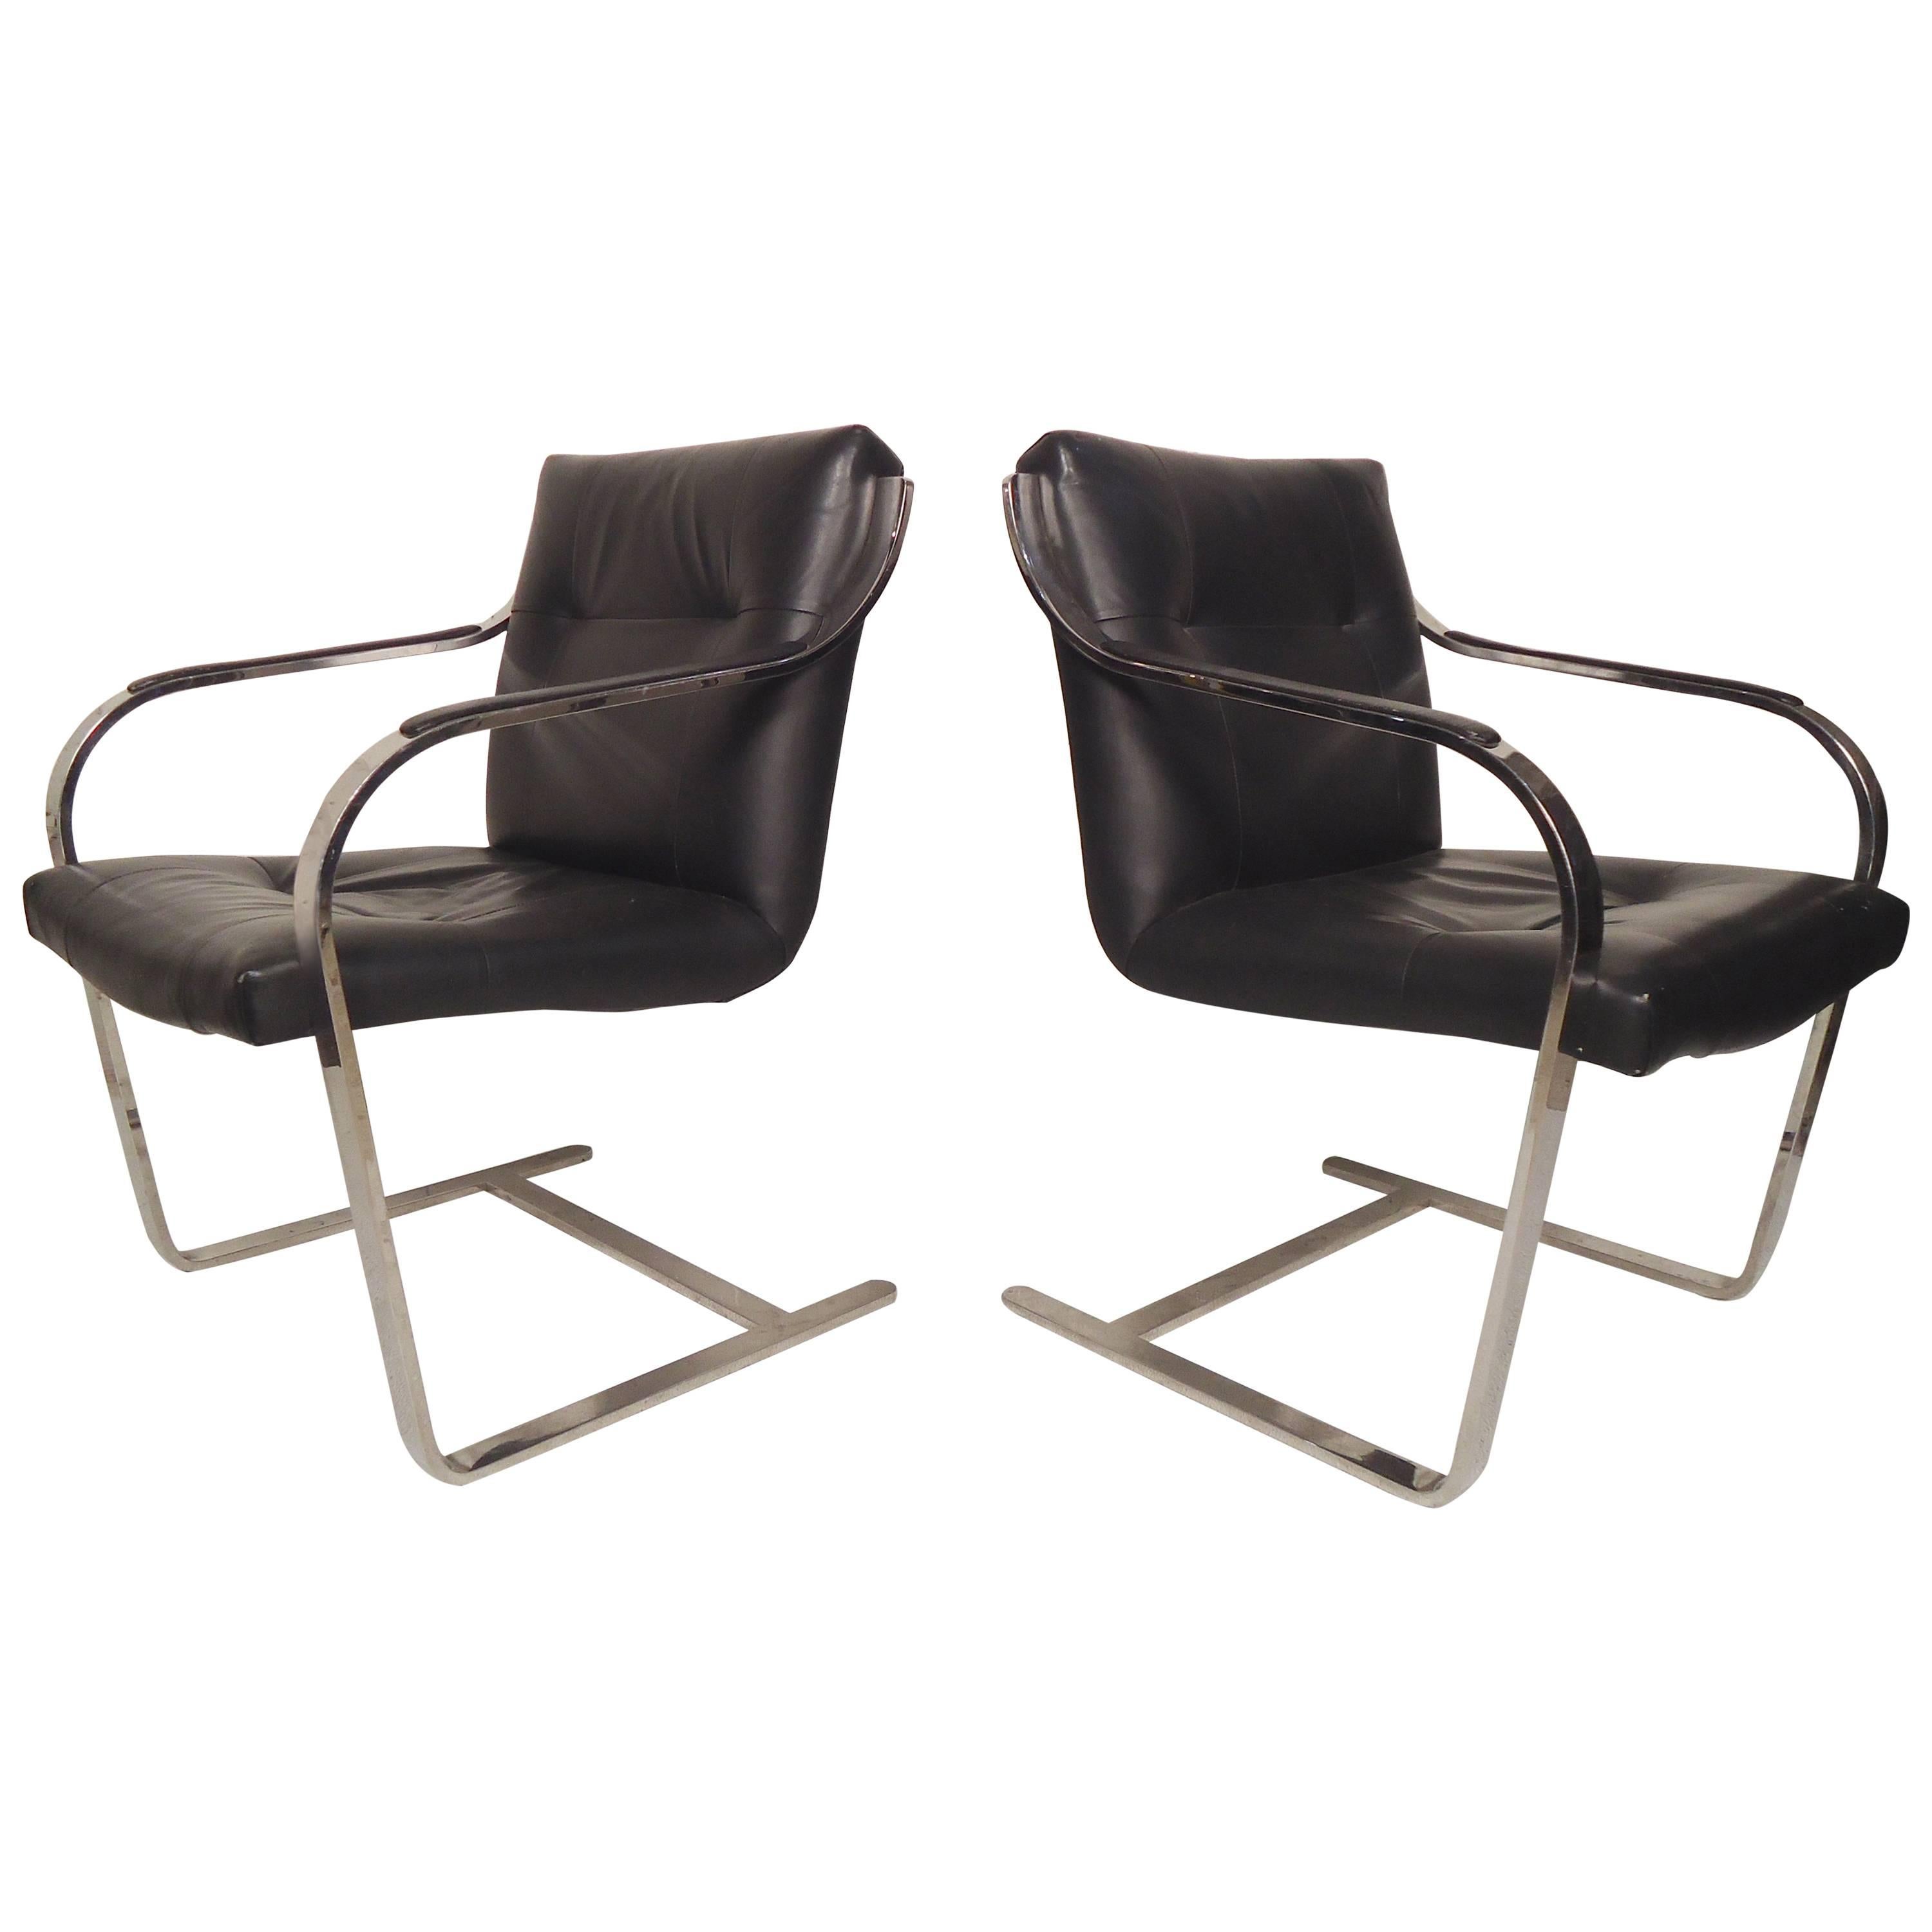 Sleek Midcentury Leather Chrome Chairs